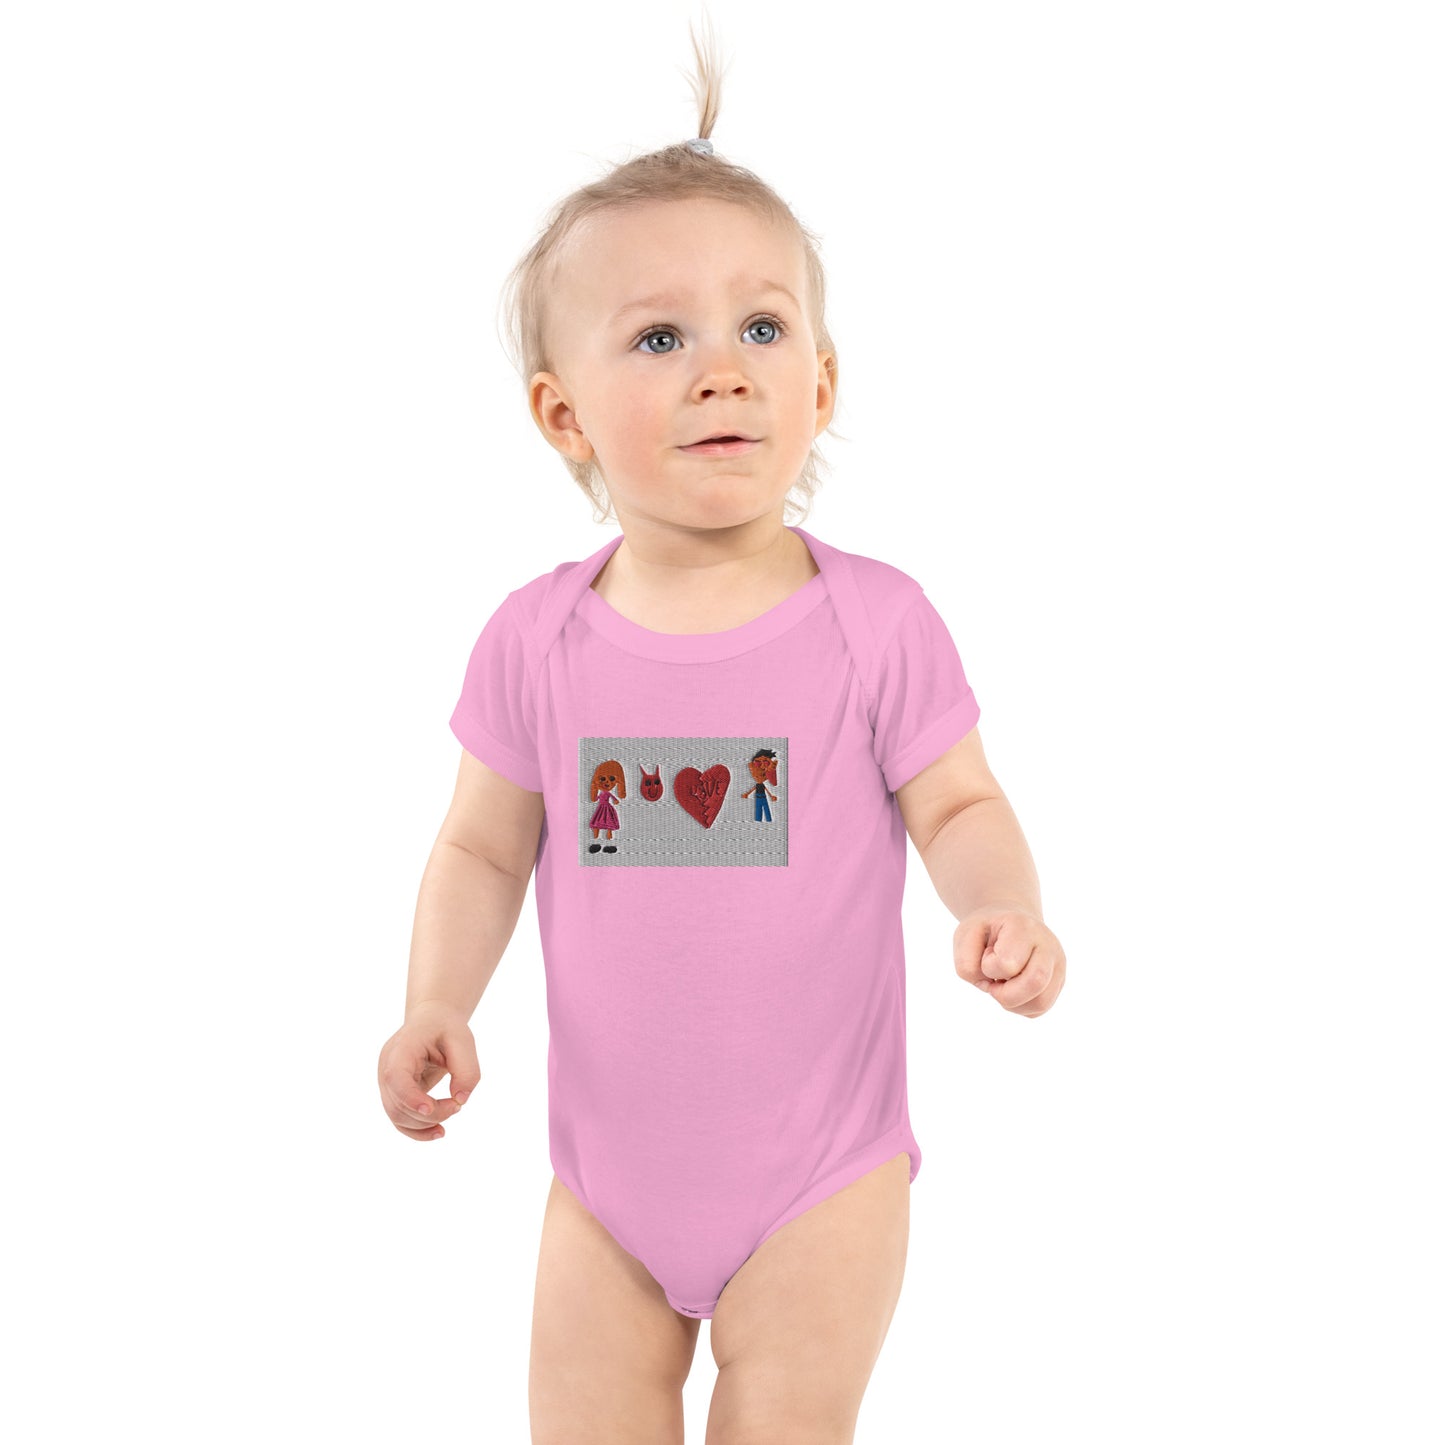 Infant Bodysuit with Olivia design